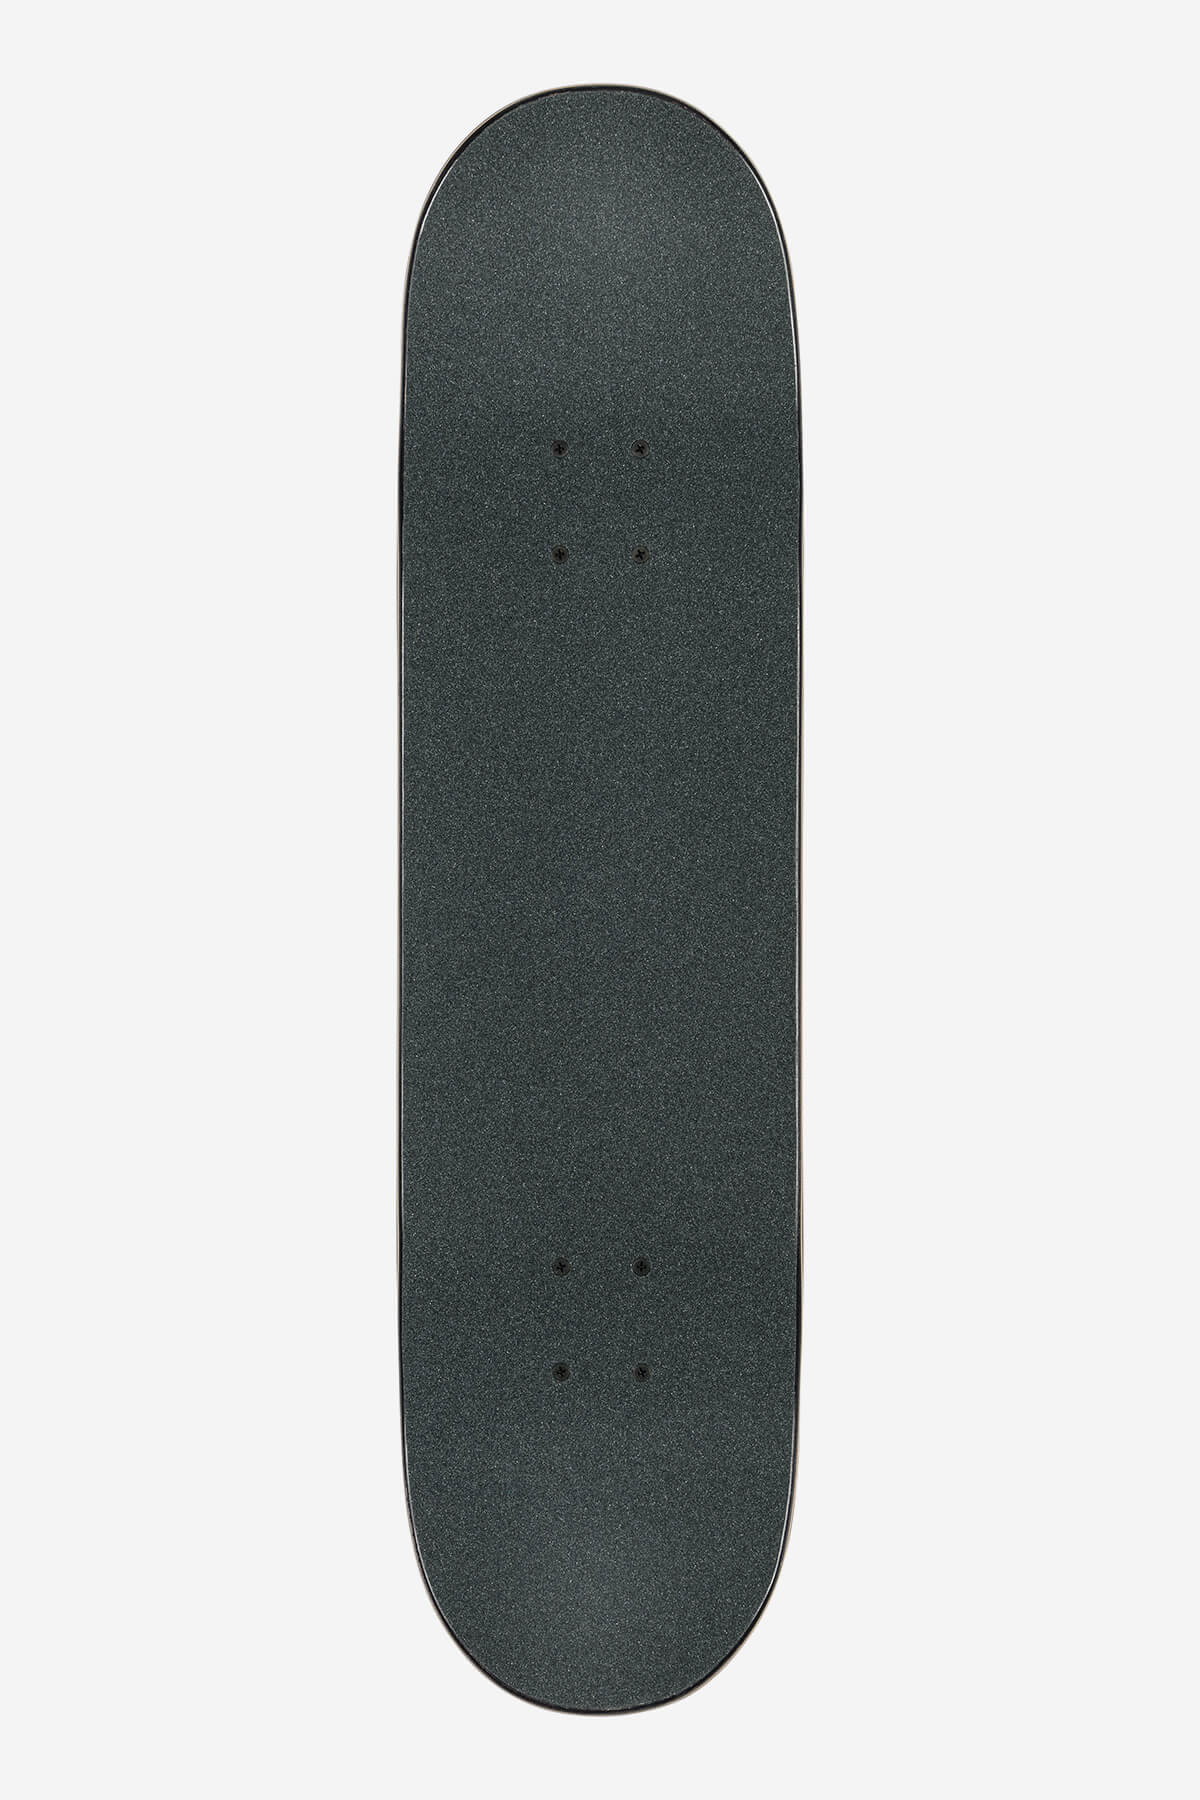 Globe - G1 Argo - Nero/Camo - 8,125" Completo Skateboard